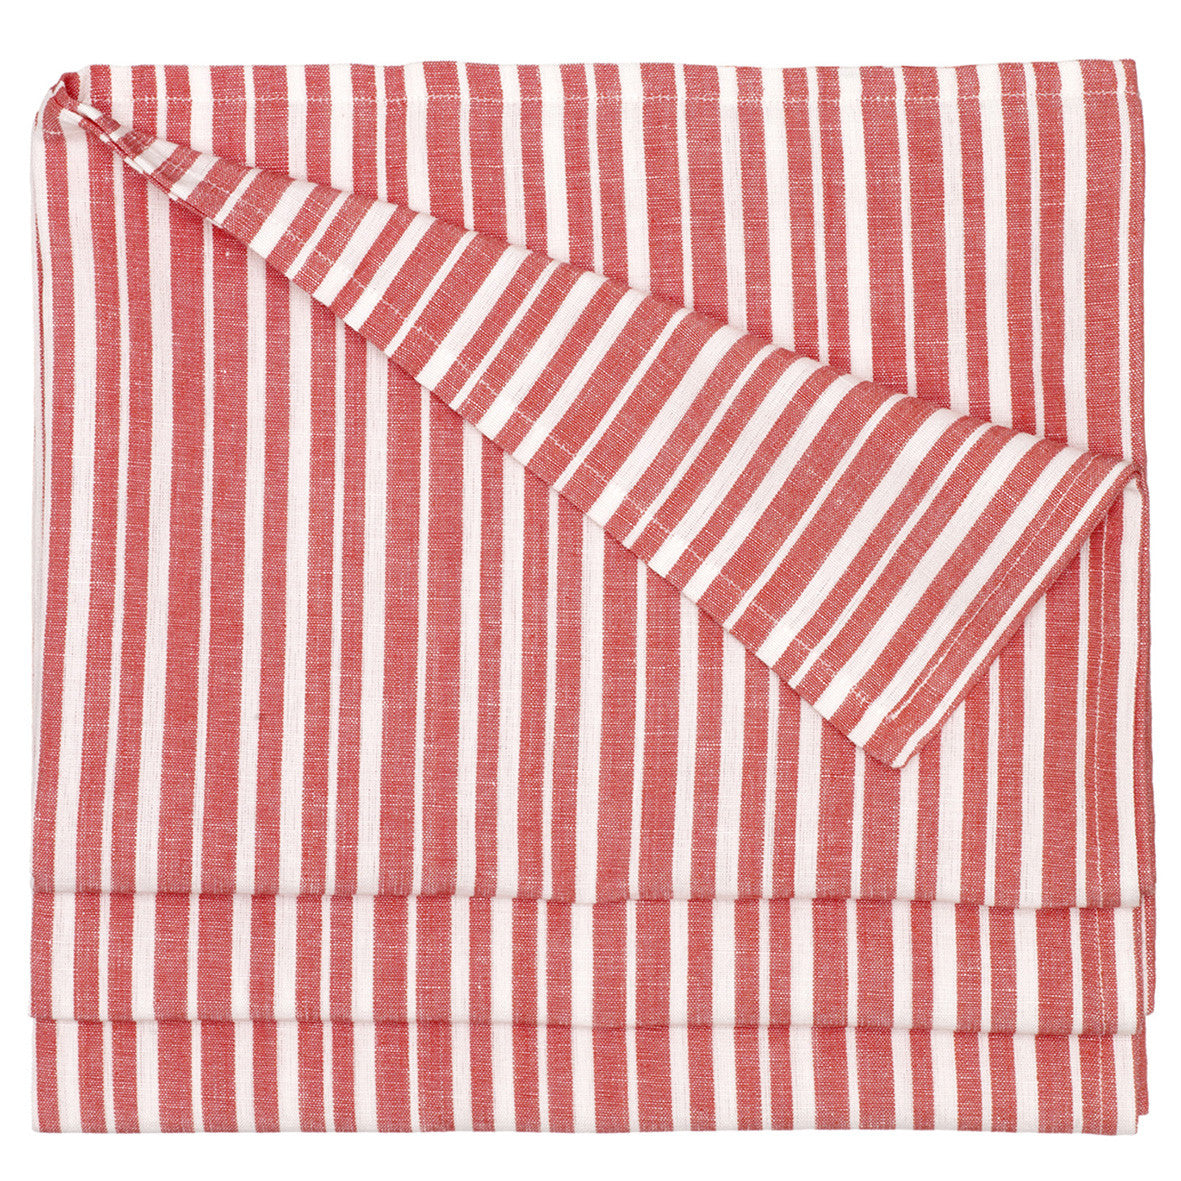 Palermo Ticking Stripe Cotton Linen Tablecloth in Geranium Red Canada usa